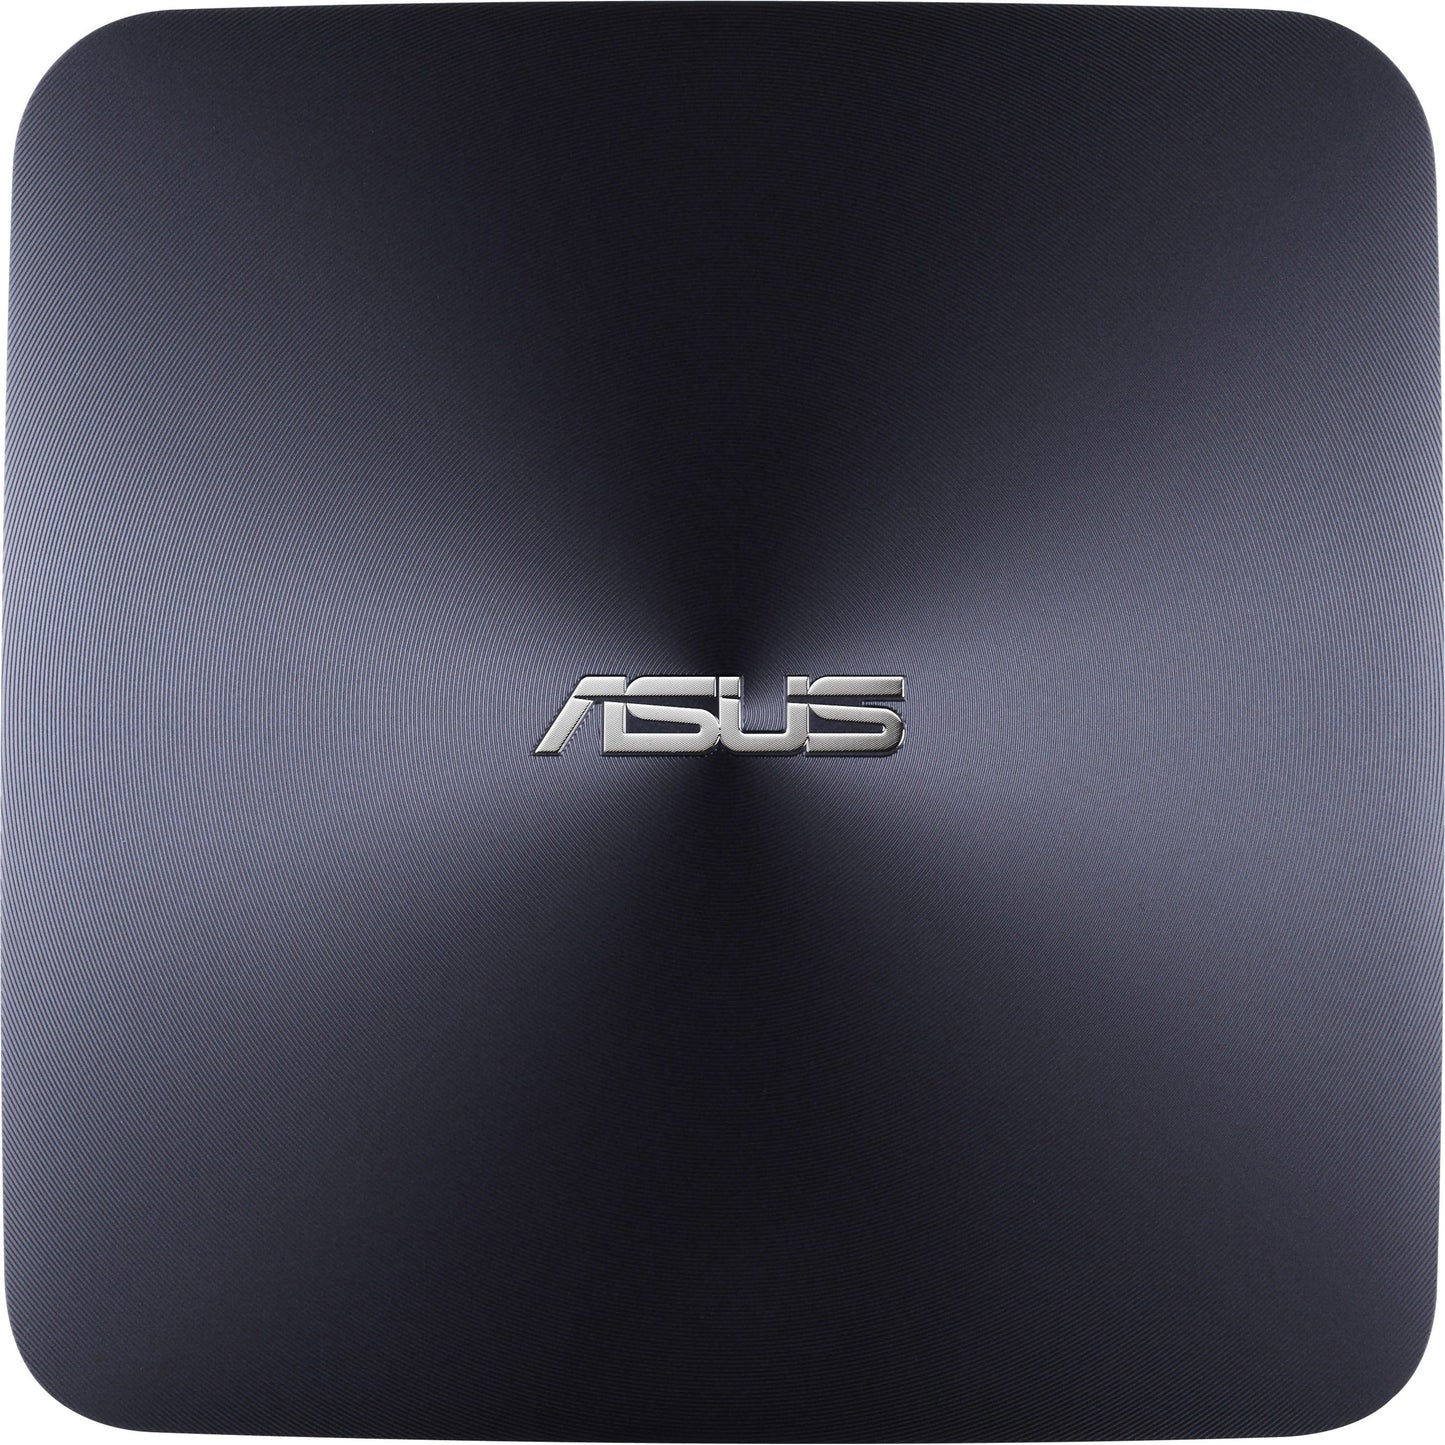 Asus VivoMini UN62-M037M Desktop Computer - Intel Core i5 4th Gen i5-4210U 1.70 GHz - Mini PC - Black